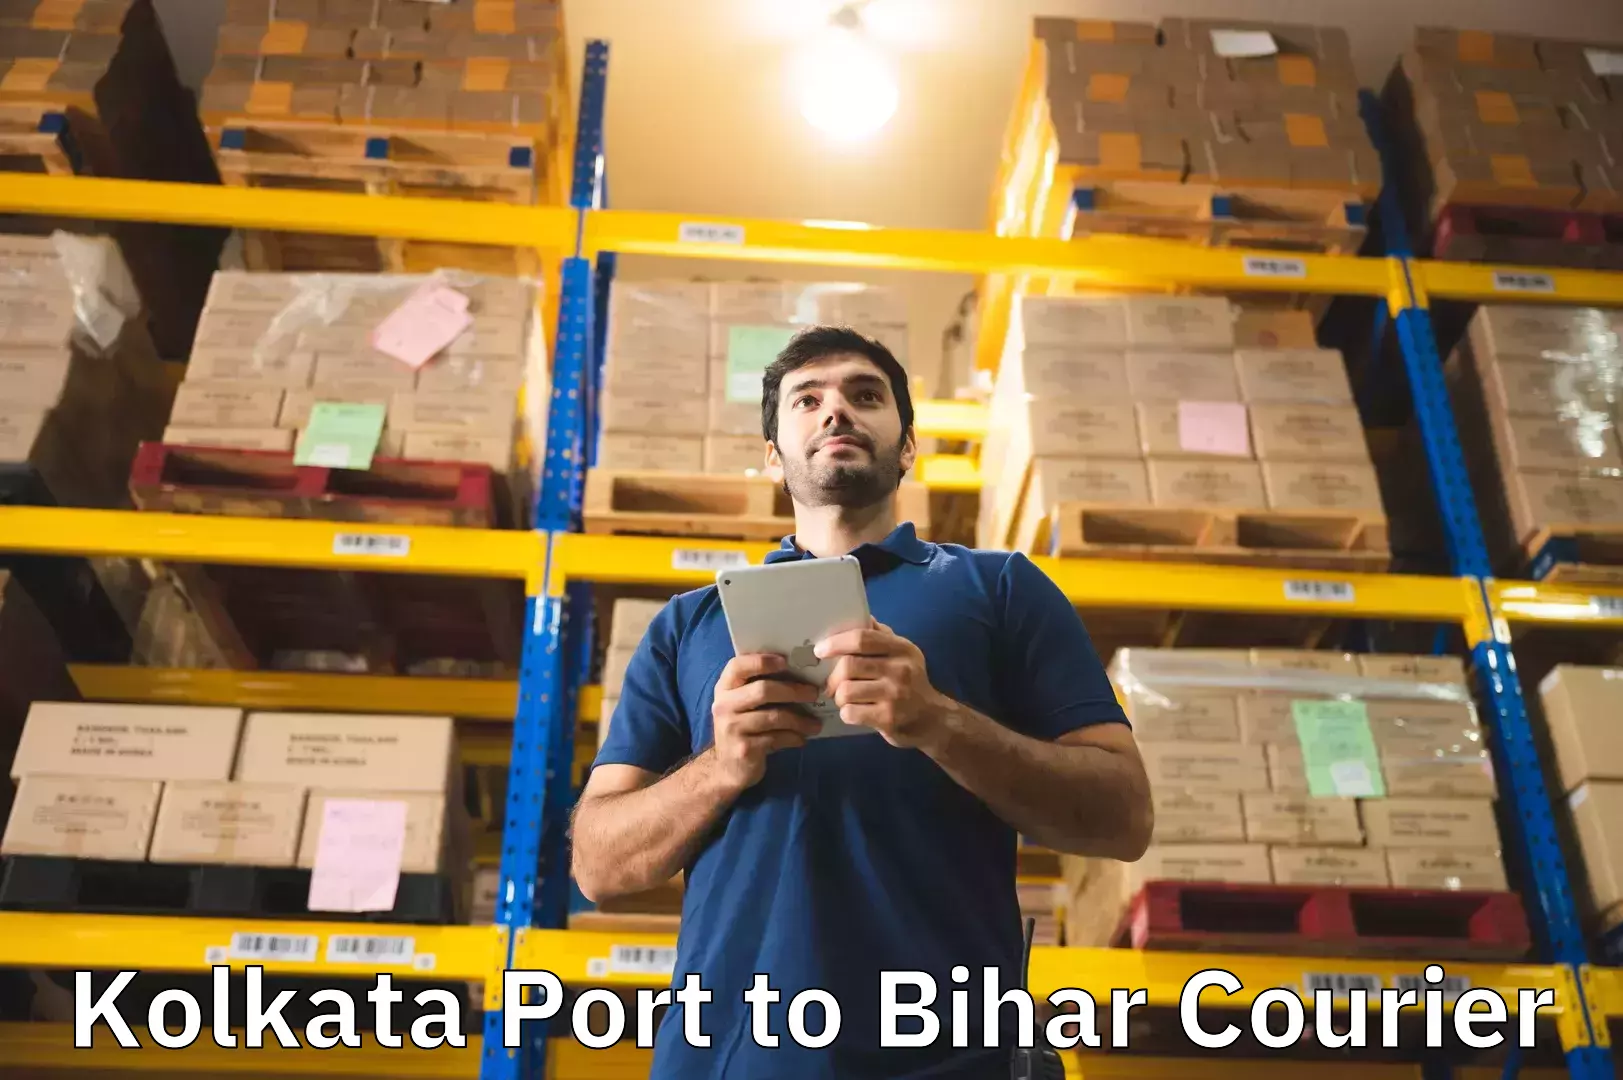 Luggage shipping service Kolkata Port to Mojharia